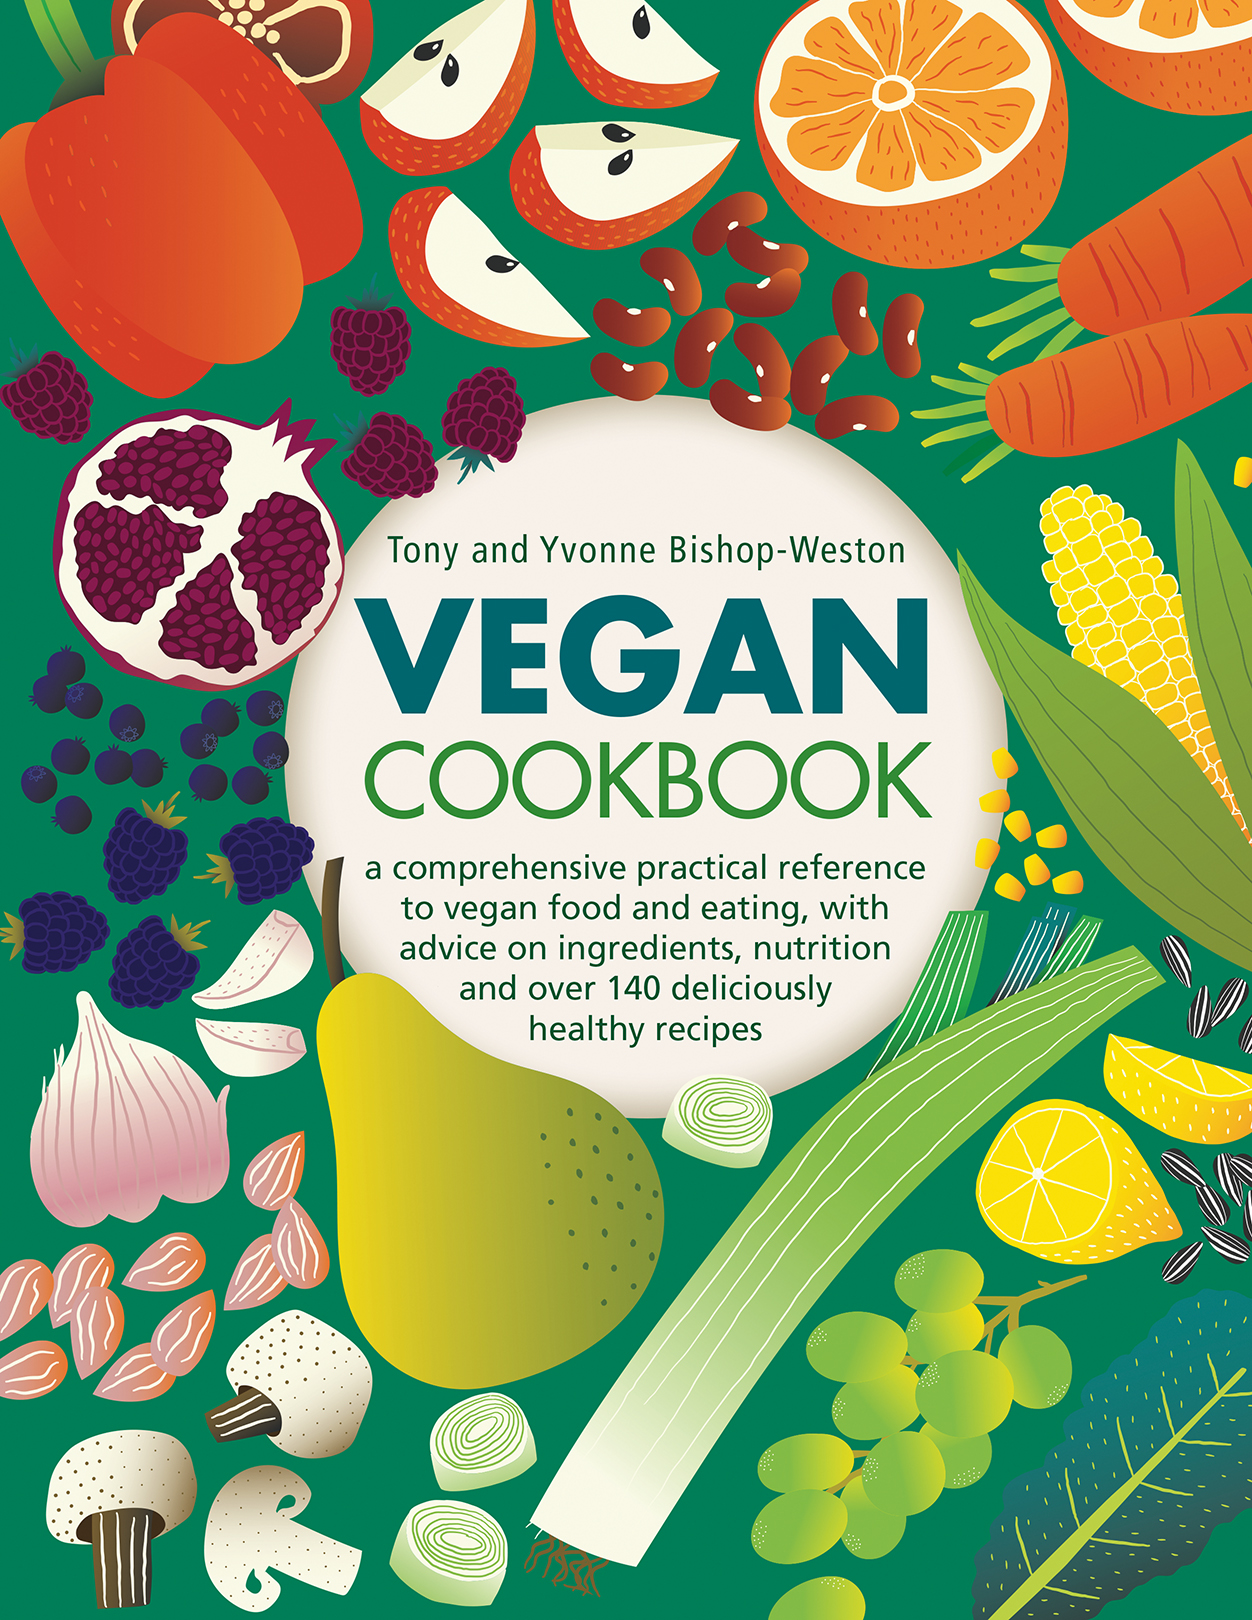 Vegan Cookbook by Tony and Yvonne Bishop-Weston